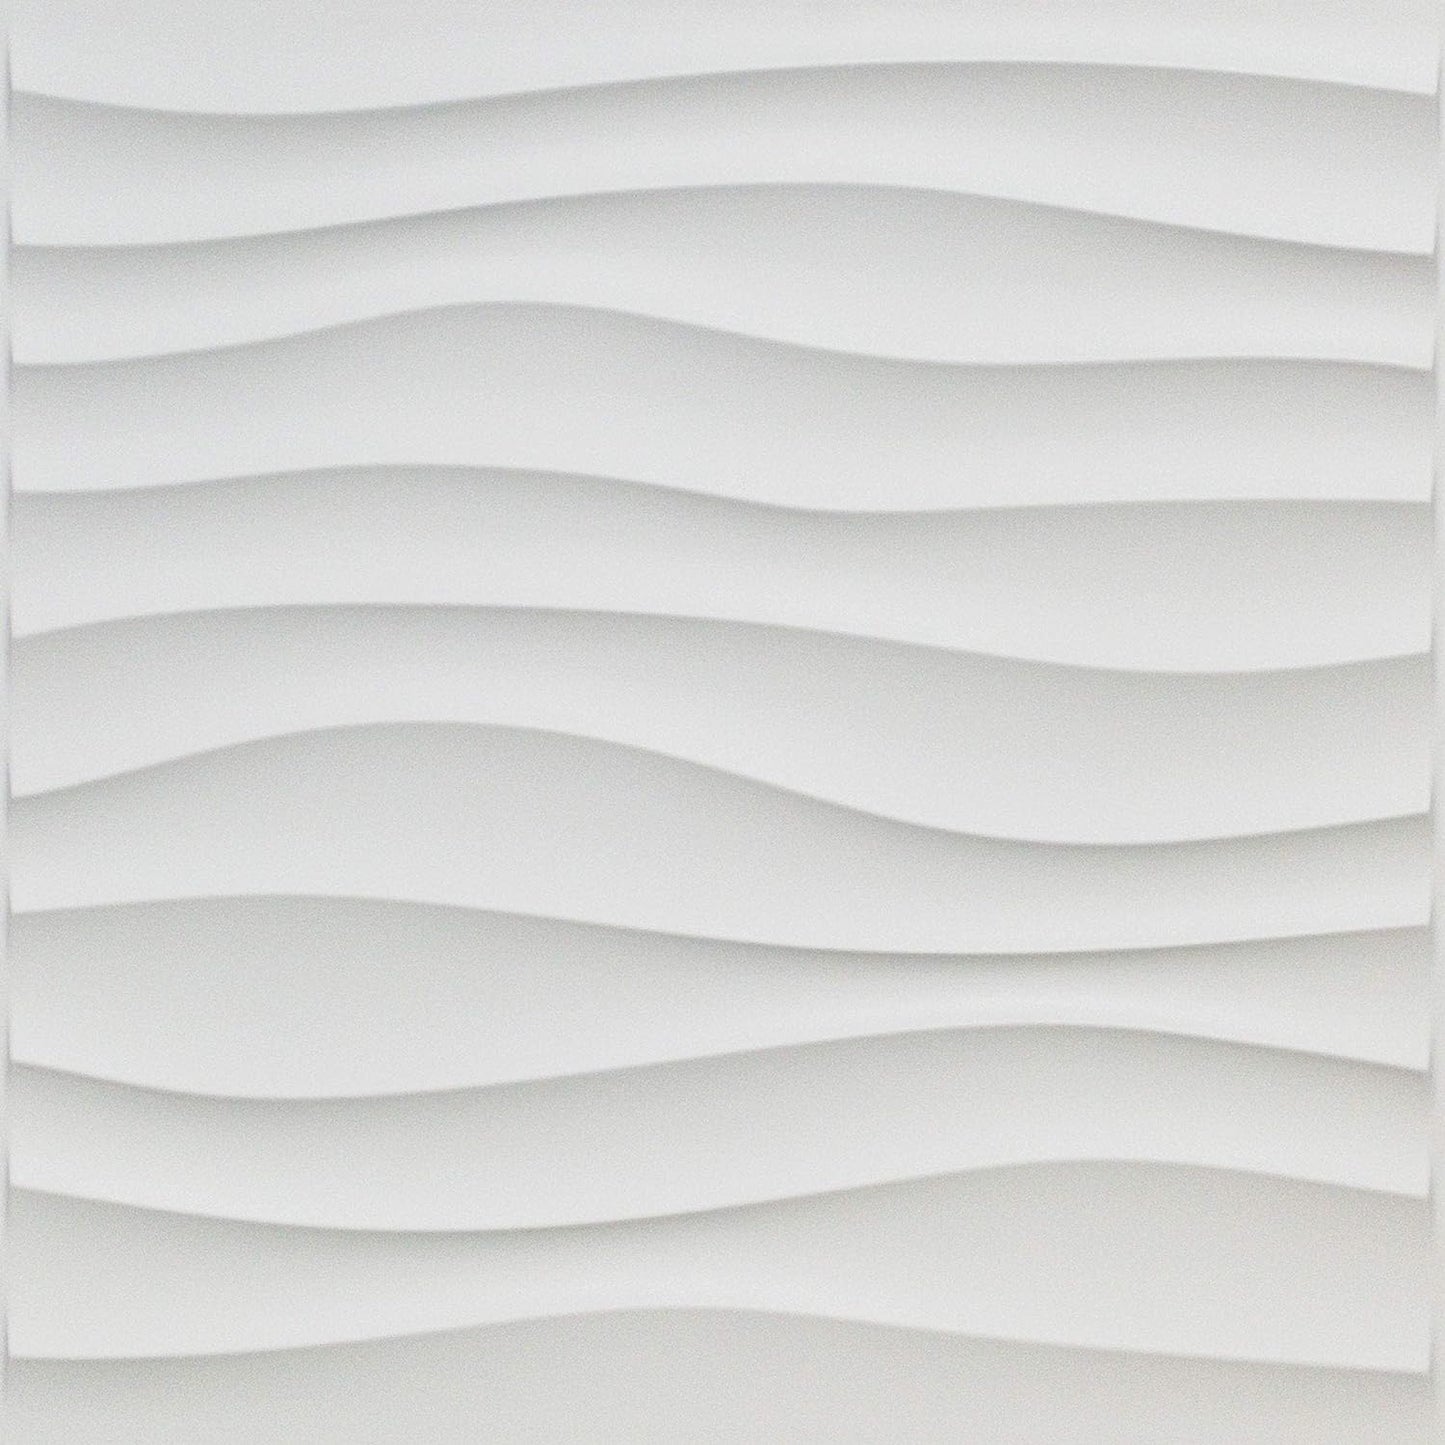 Art3d Panel de pared de plástico 3D, diseño de pared ondulado de PVC, blanco, 19,7" x 19,7" (paquete de 12)